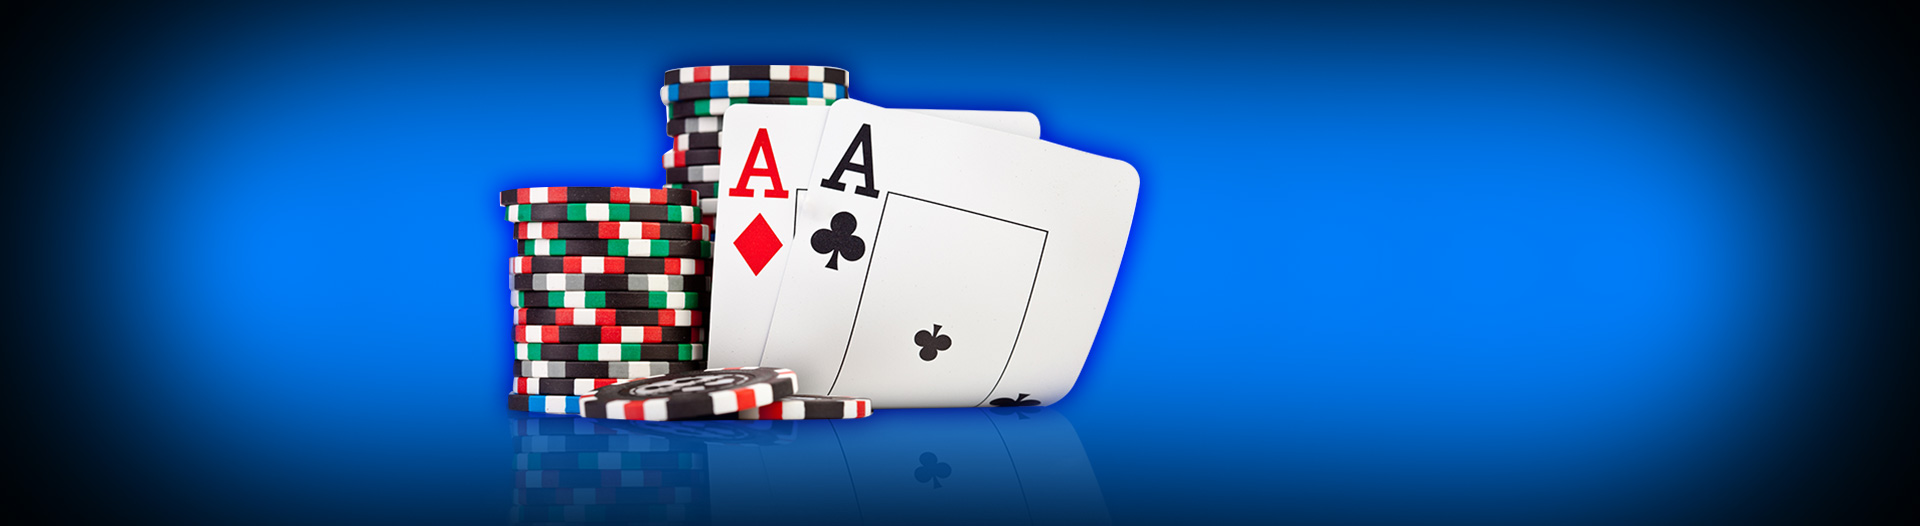 Pokerstars download bono sin deposito casino Salvador - 58362